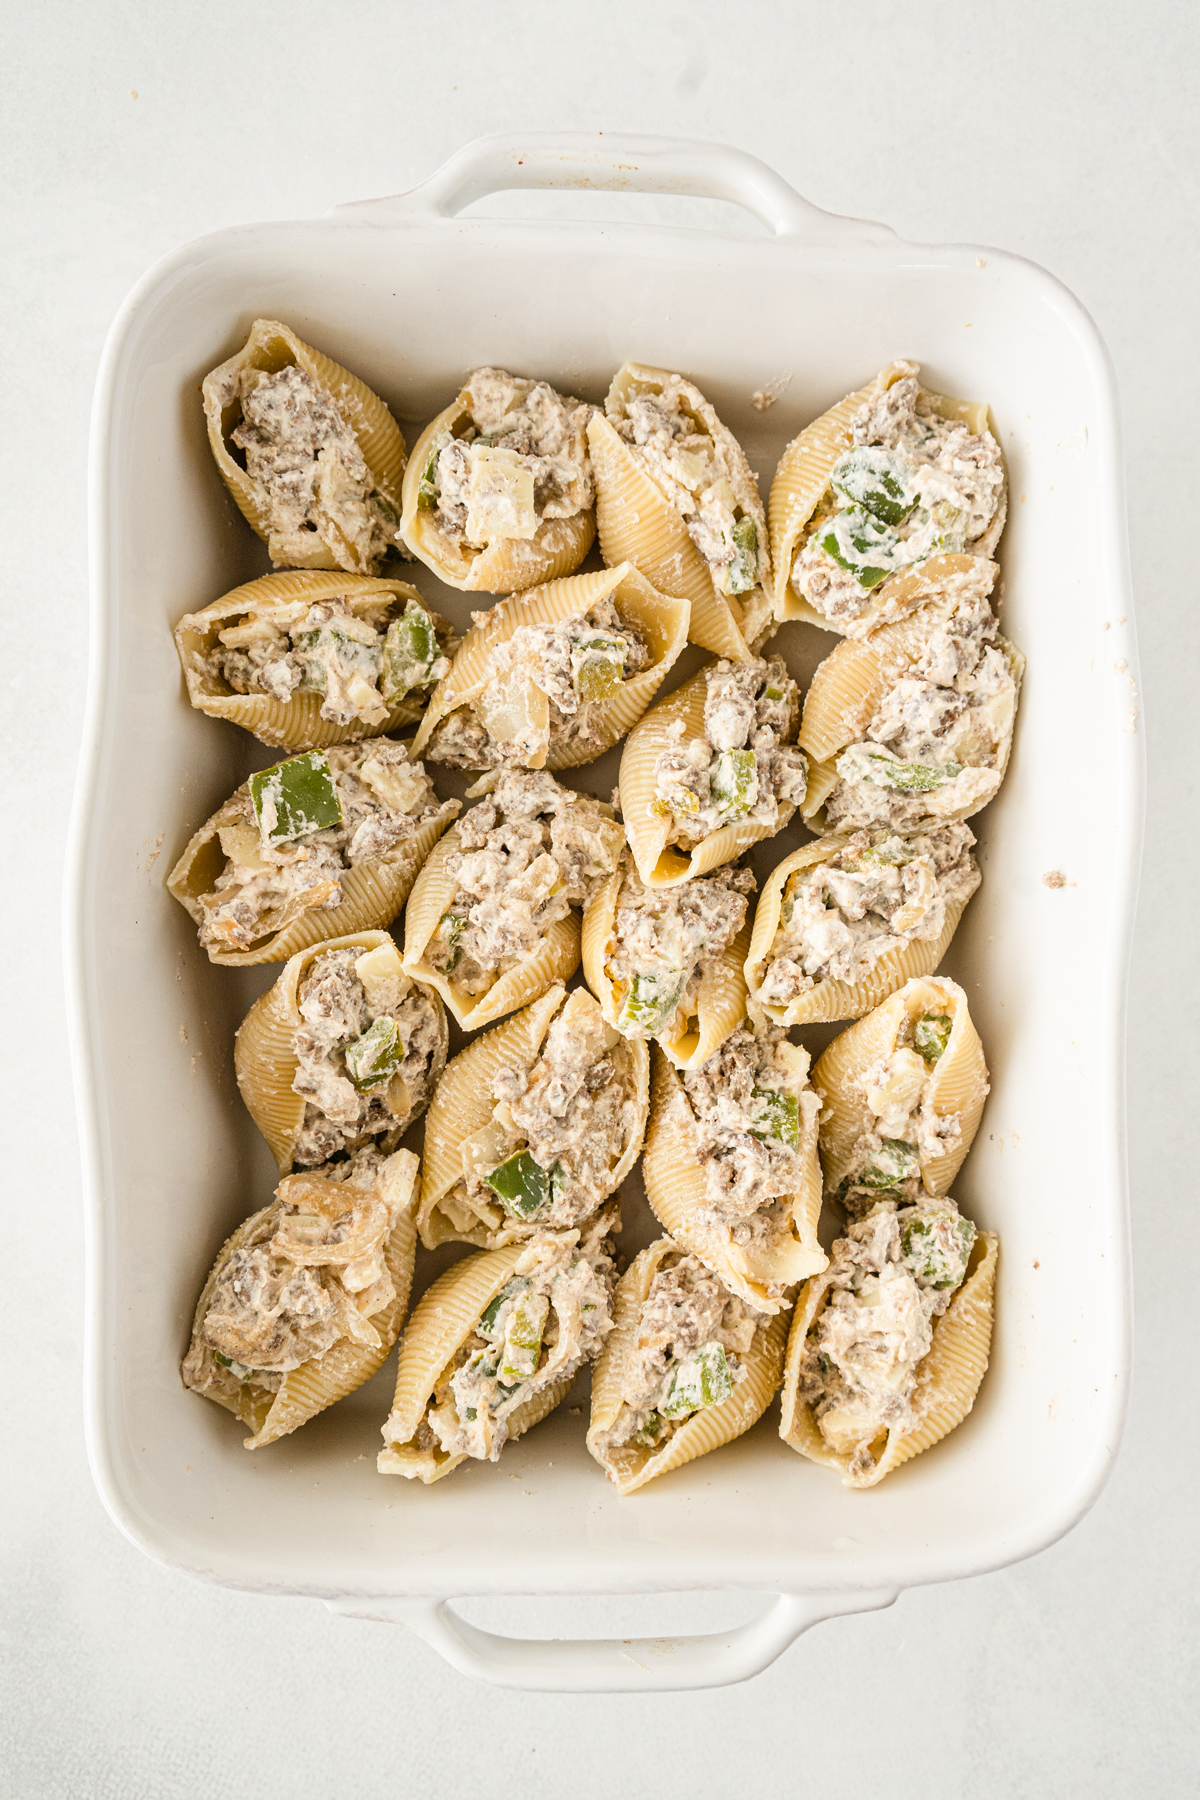 pasta shells stuffed with filling, no suace